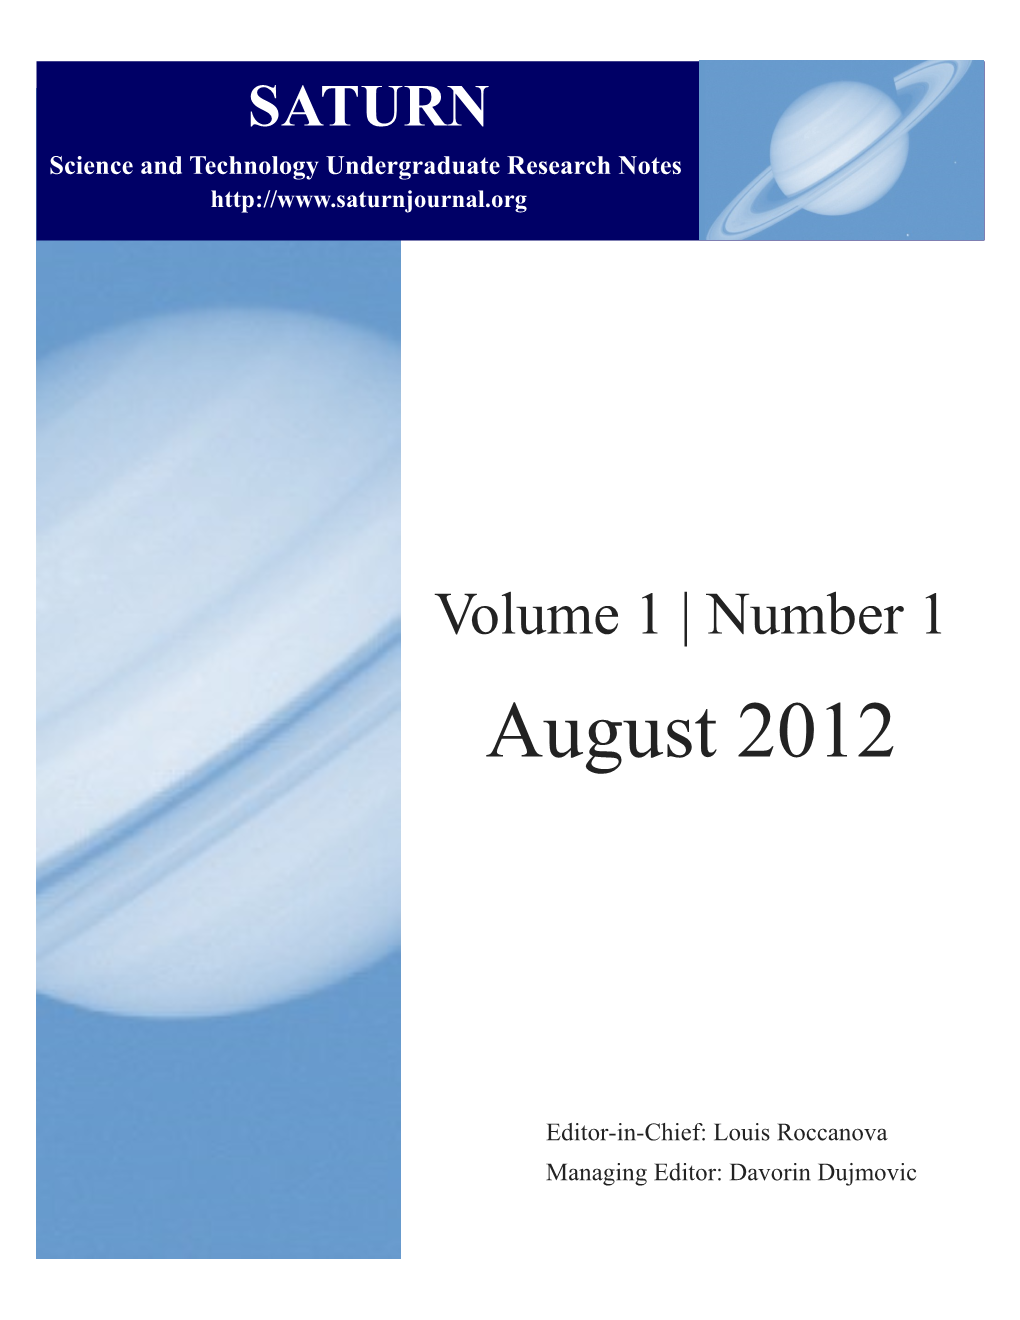 August 2012, Vol 1, No 1